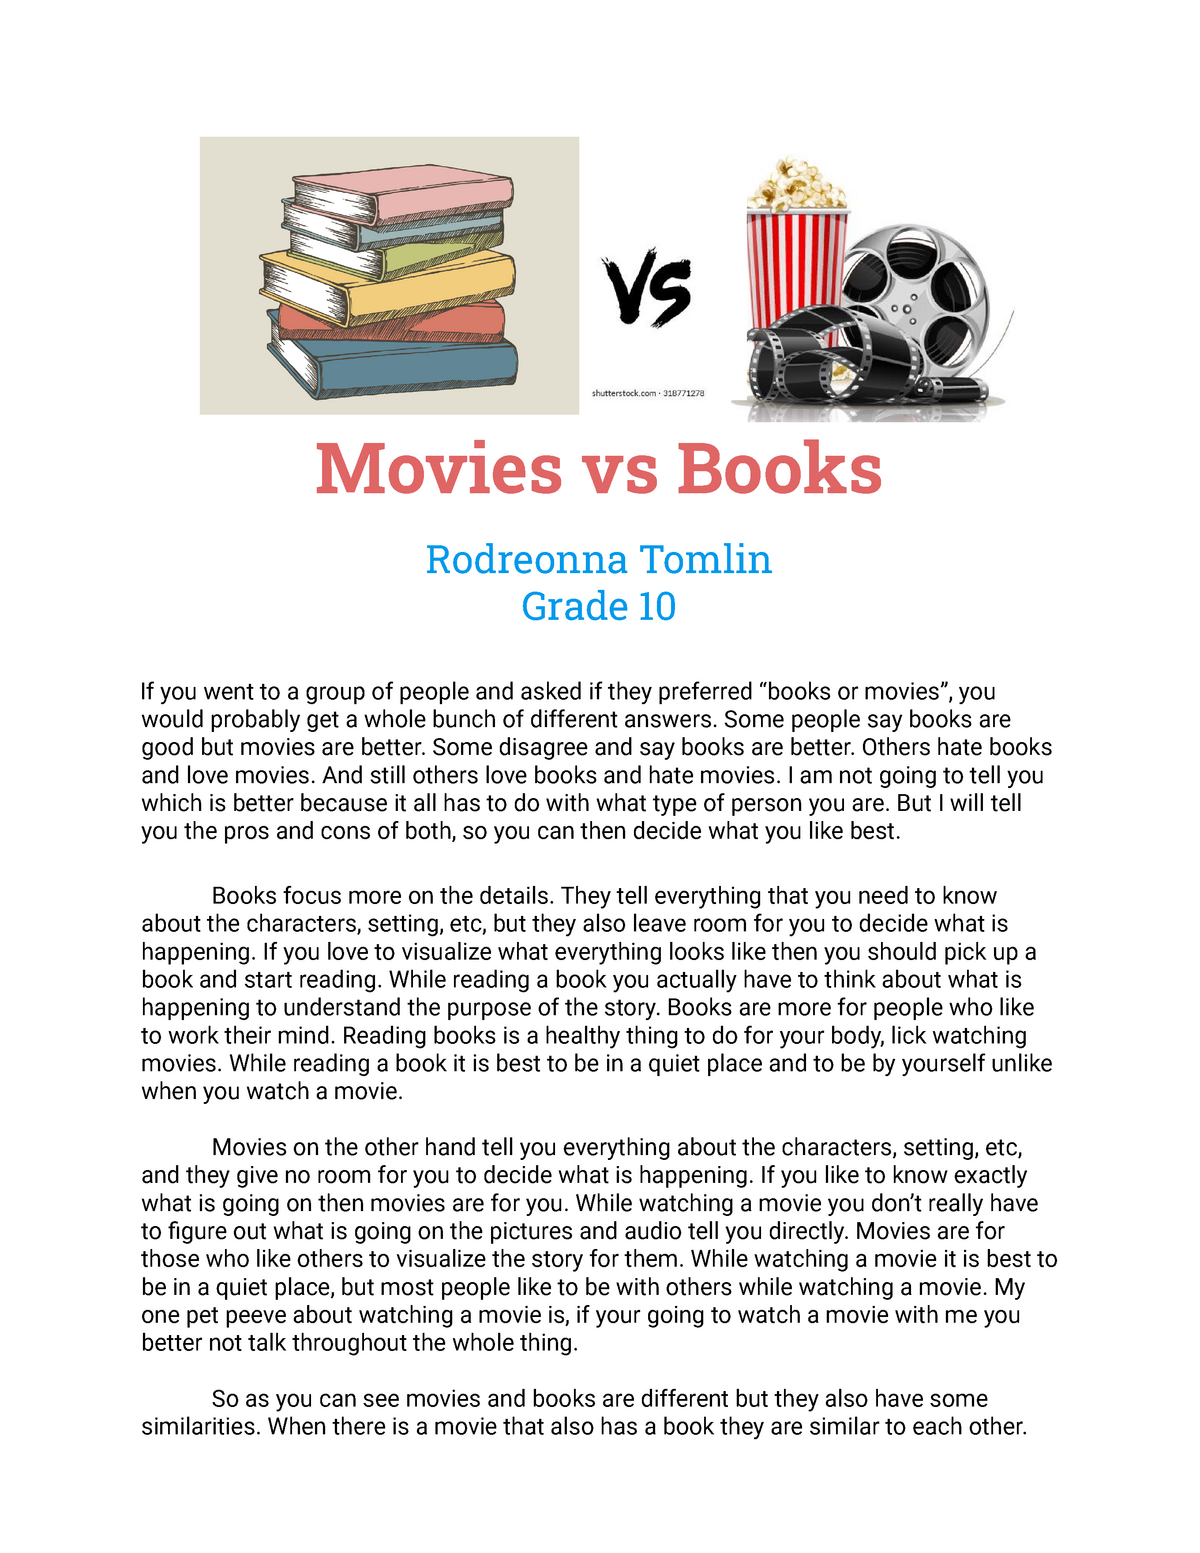 book and movie comparison essay example